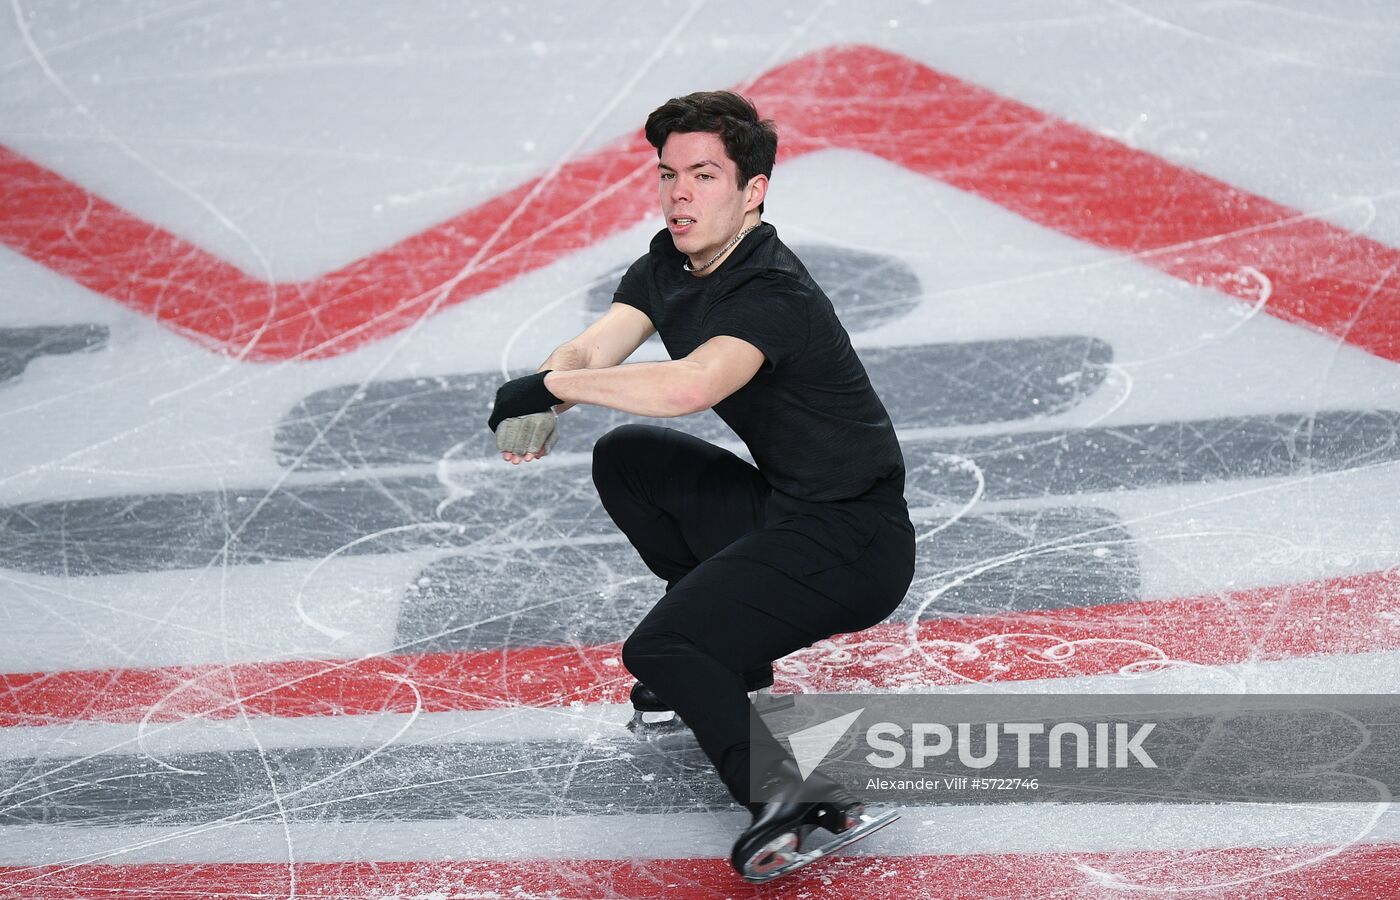 Canada Figure Skating Grand Prix Final